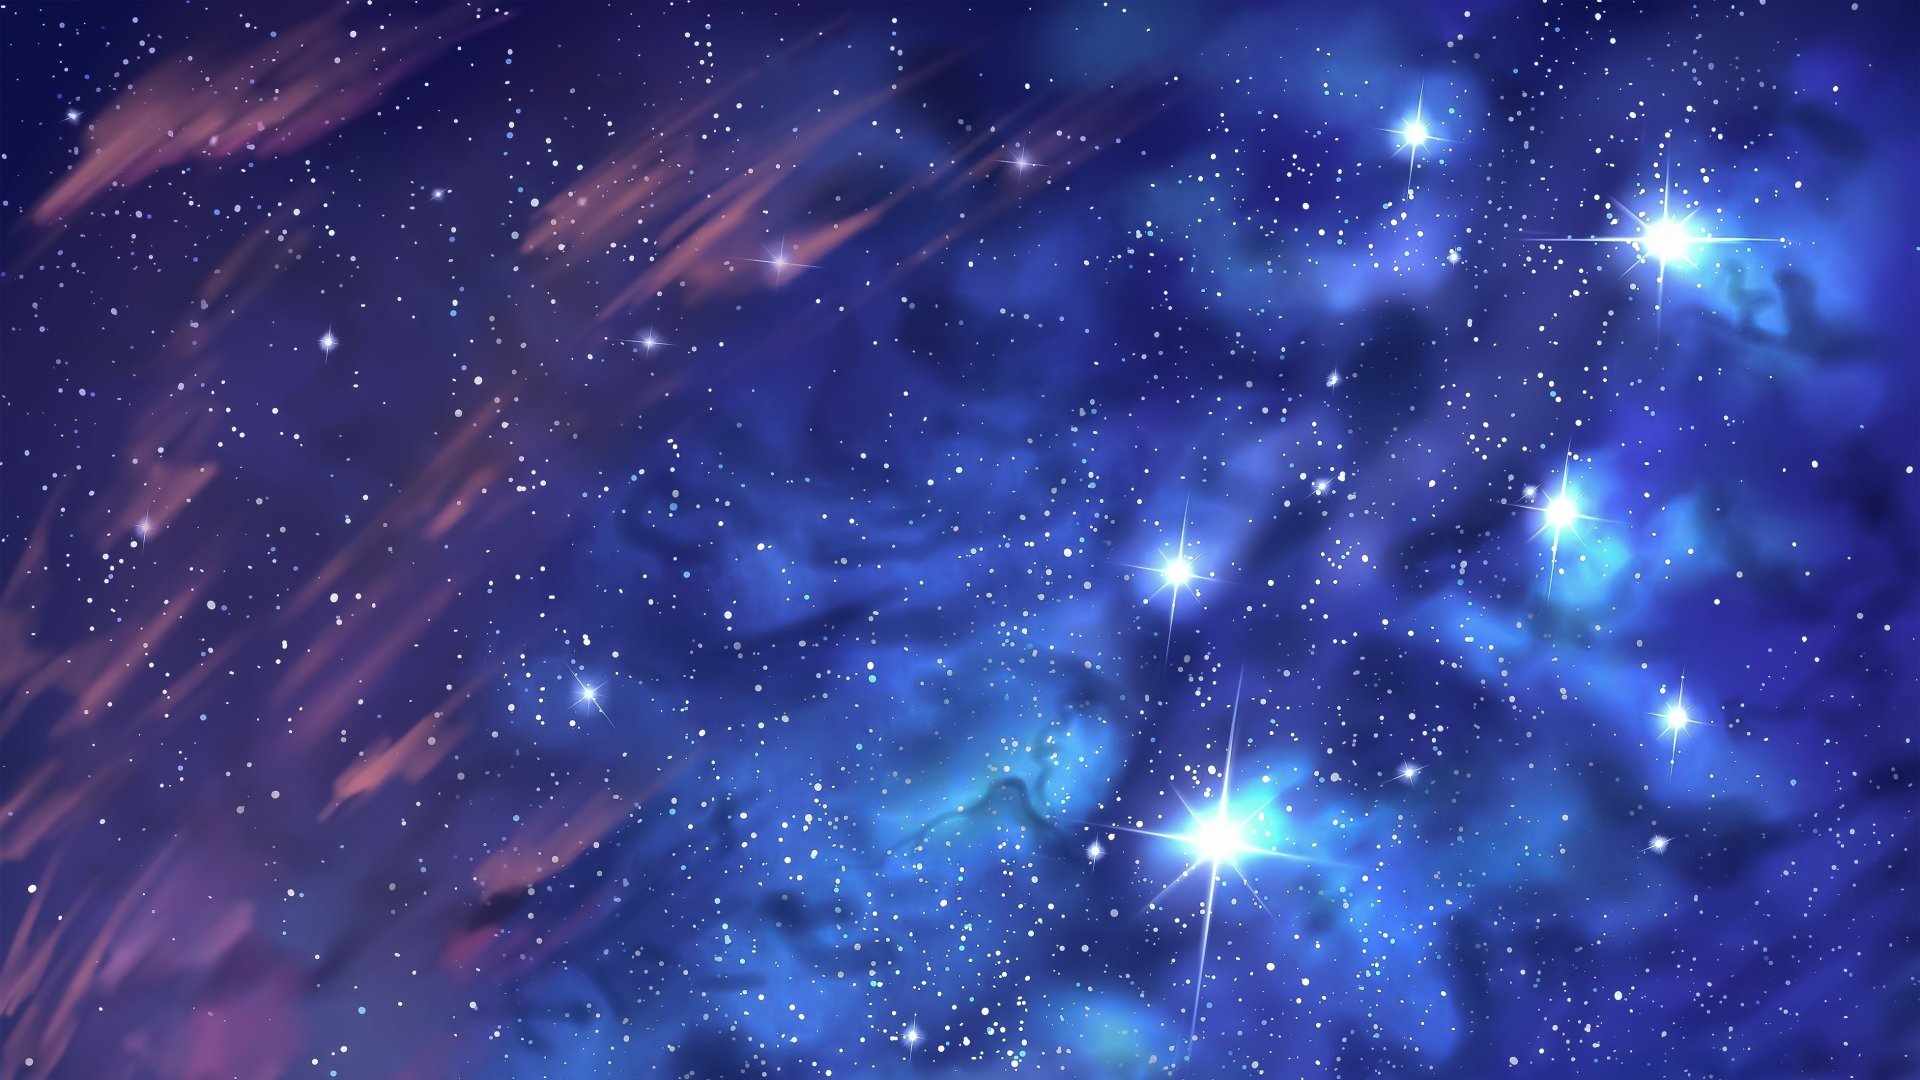 A mesmerizing Anime-inspired starry sky desktop wallpaper in high definition.